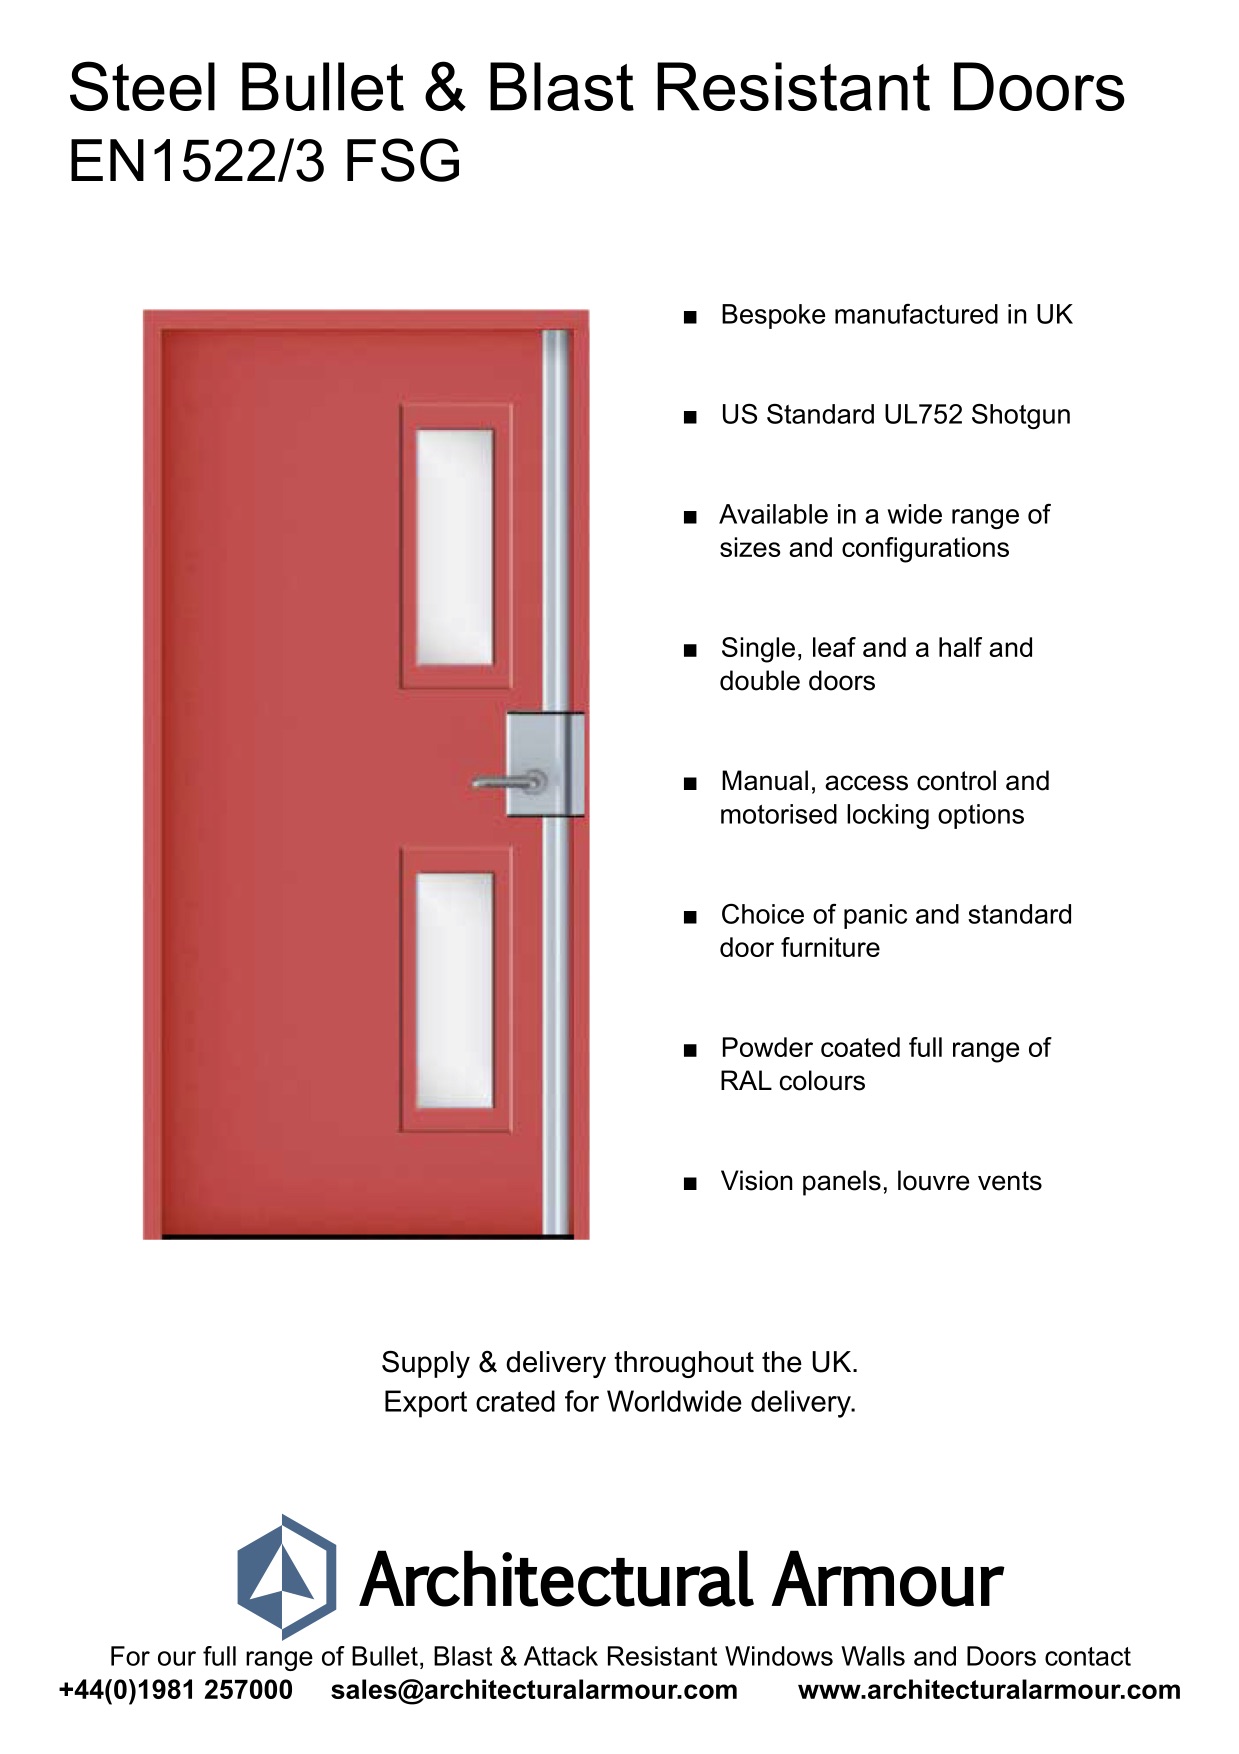 Blast-and-bulletproof-Steel-Door-Vision Panels-EN1522-3-FSG